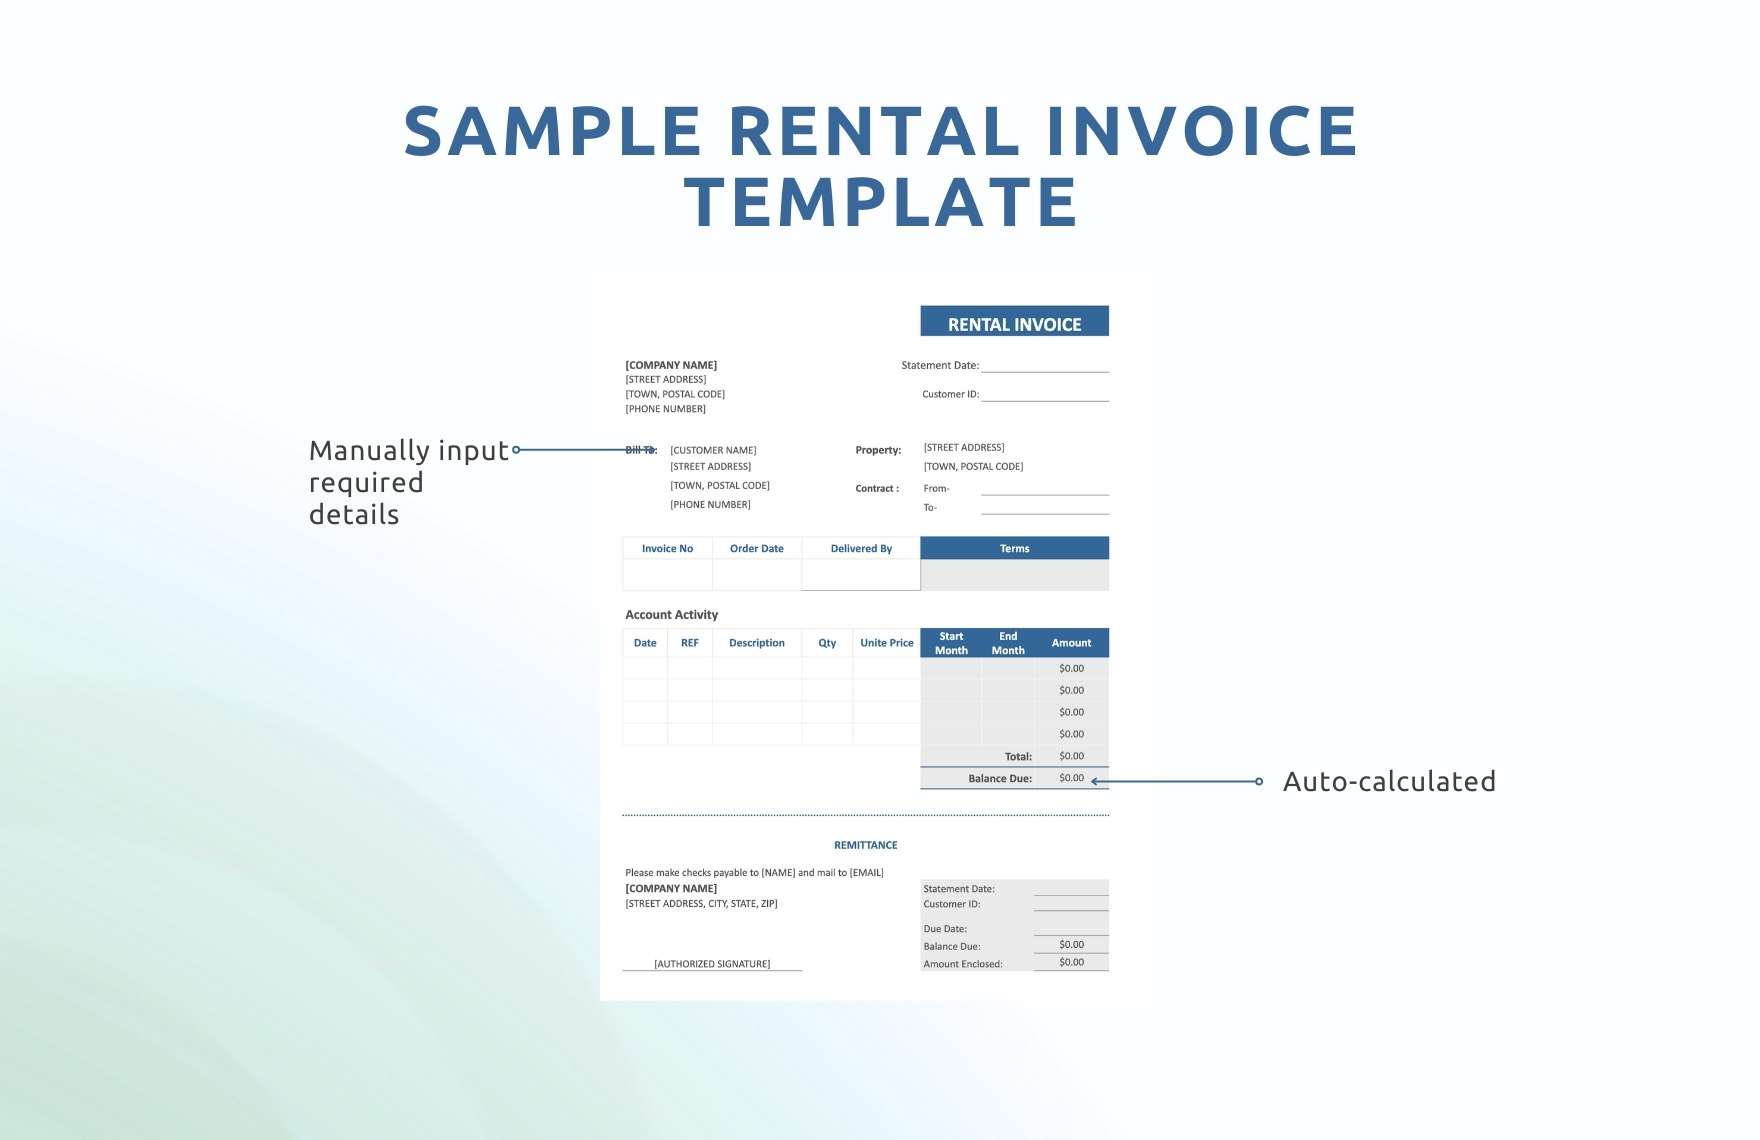 Sample Rental Invoice Template